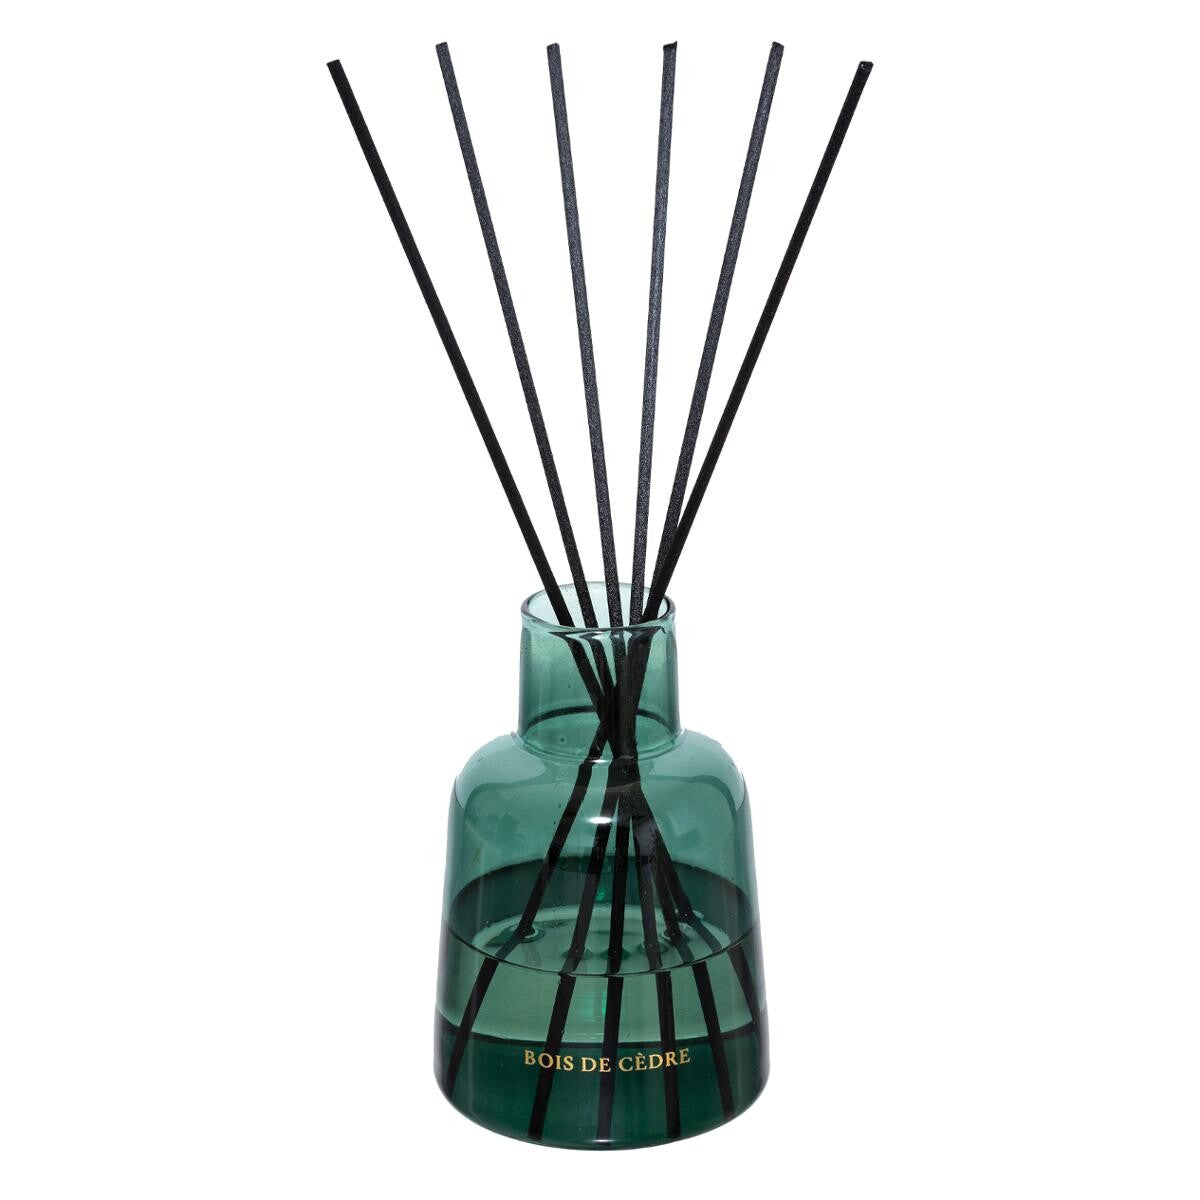 Perfume stick diffuser with cedar wood aroma, 250ml